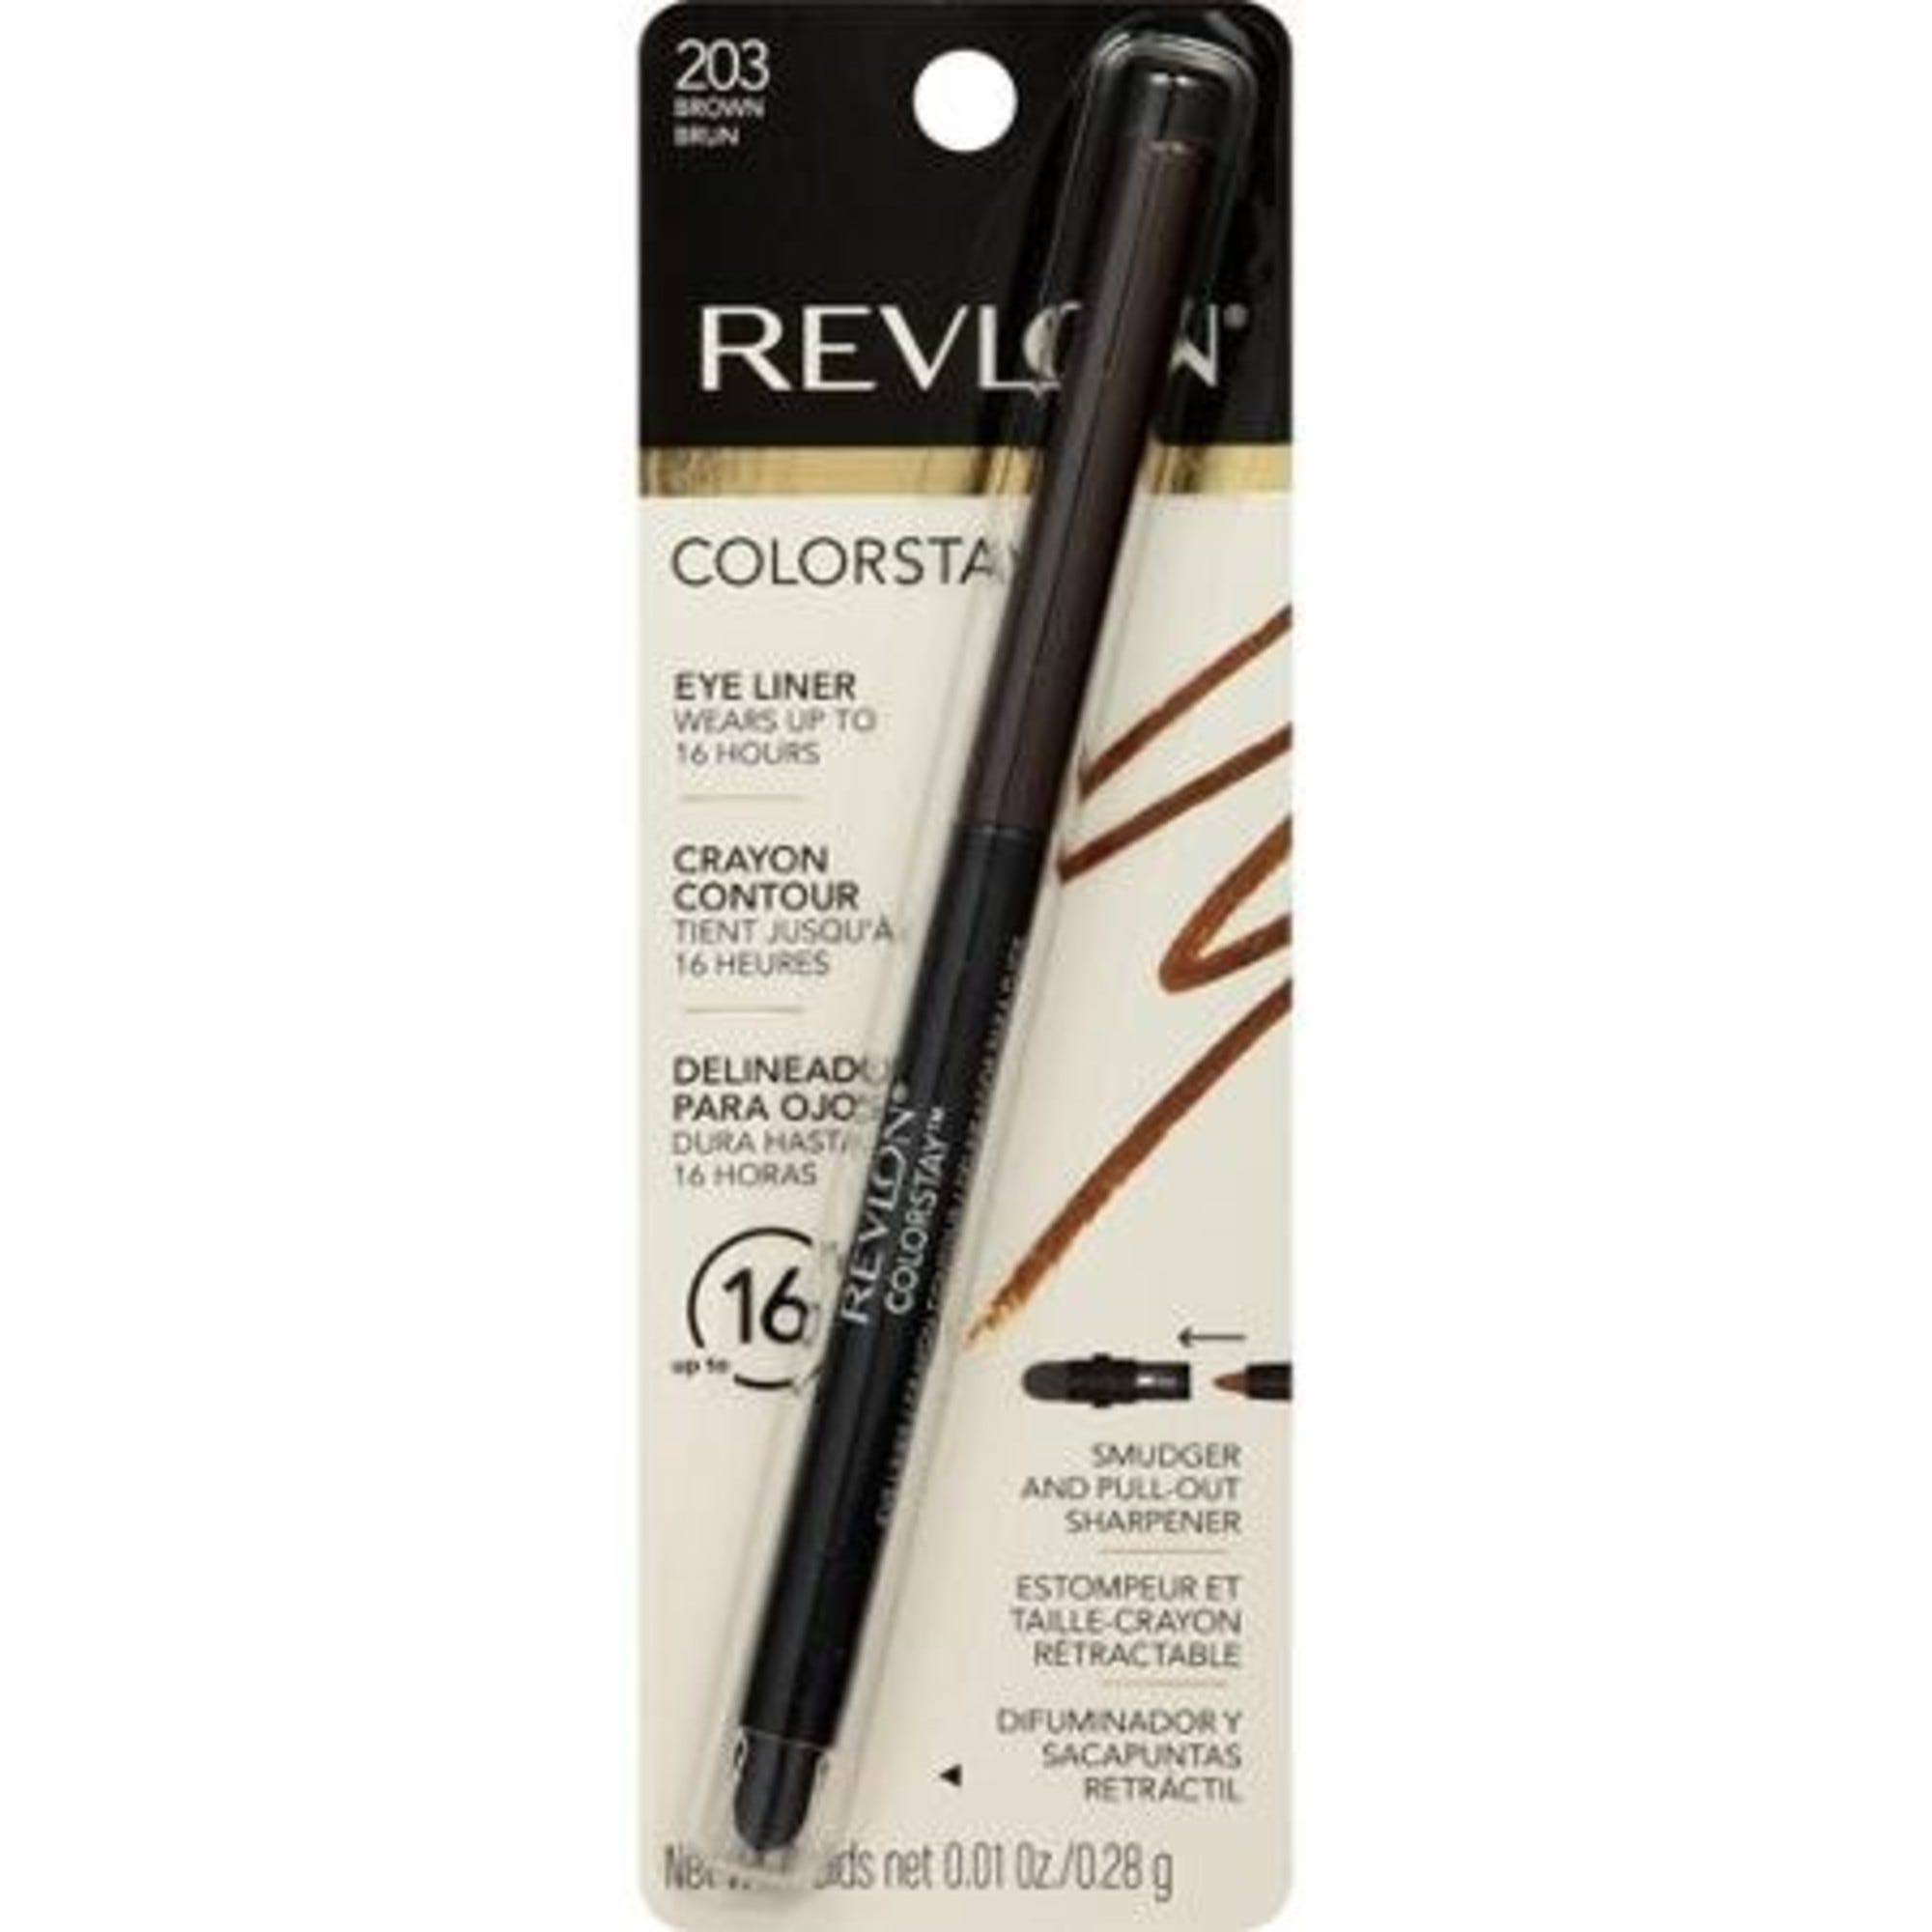 Revlon ColorStay Eyeliner With Sharpener - 203 Brown